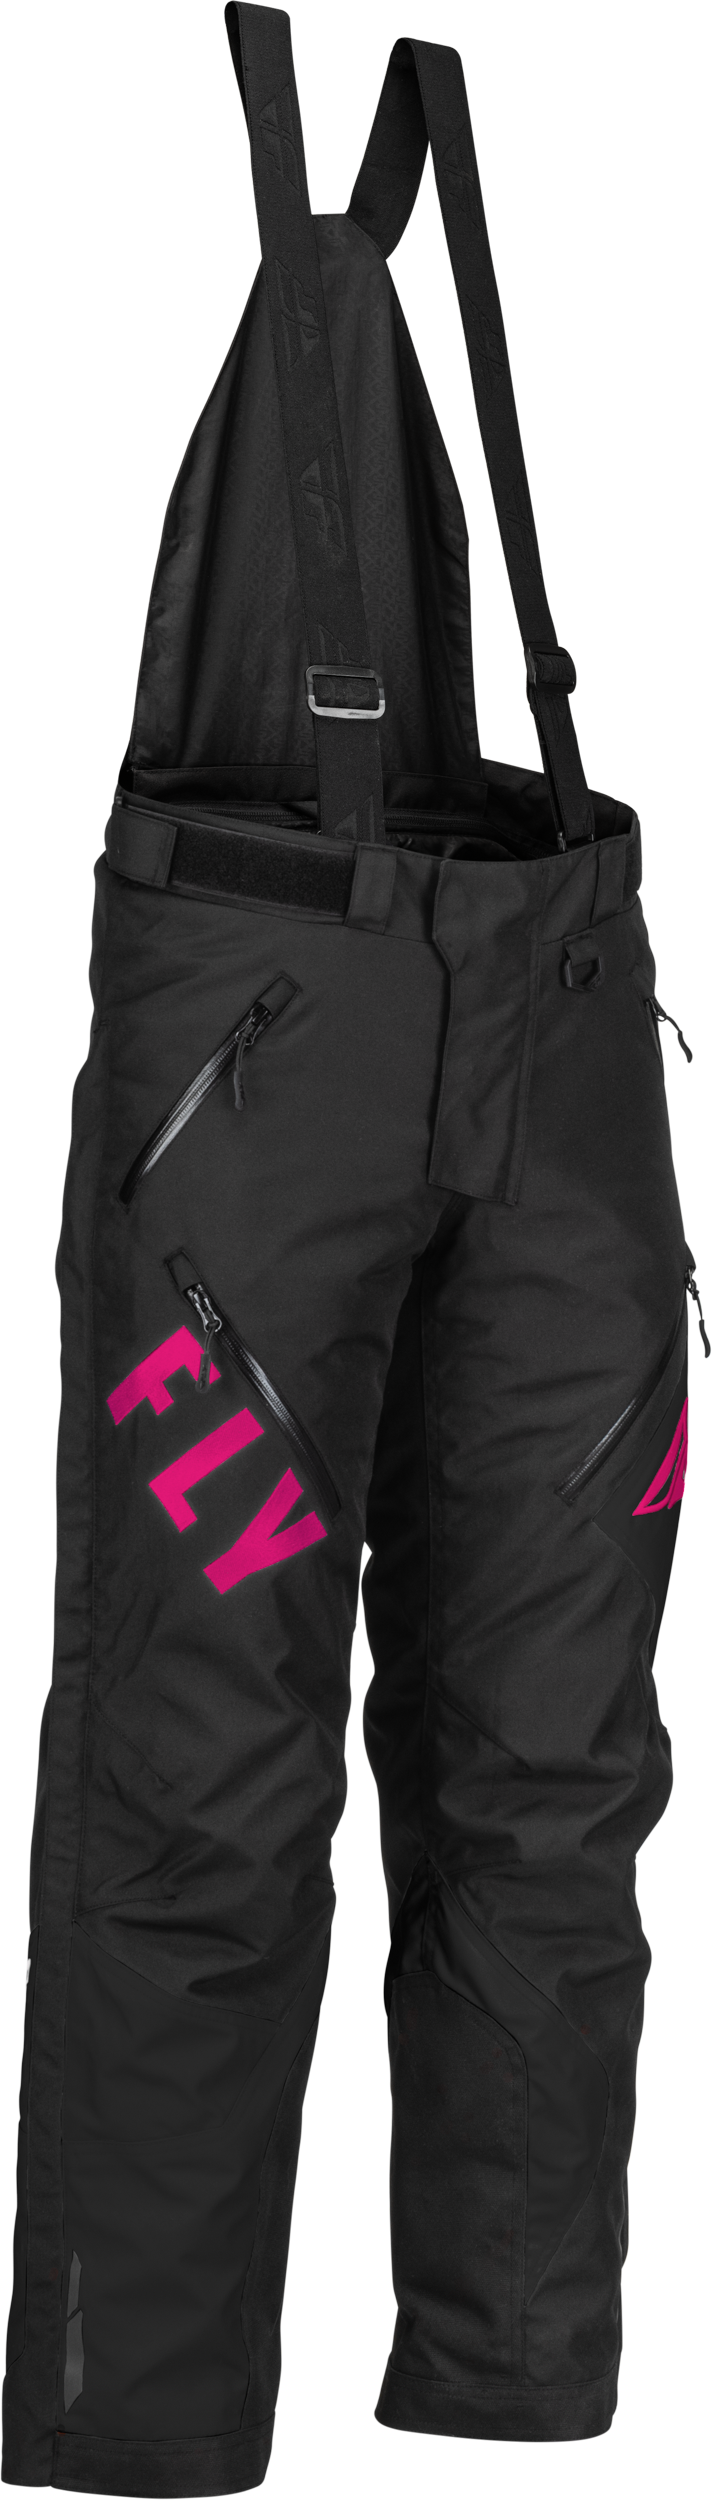 FLY RACING Women's Snx Pro Pants Black/Pink Lg 470-4517L